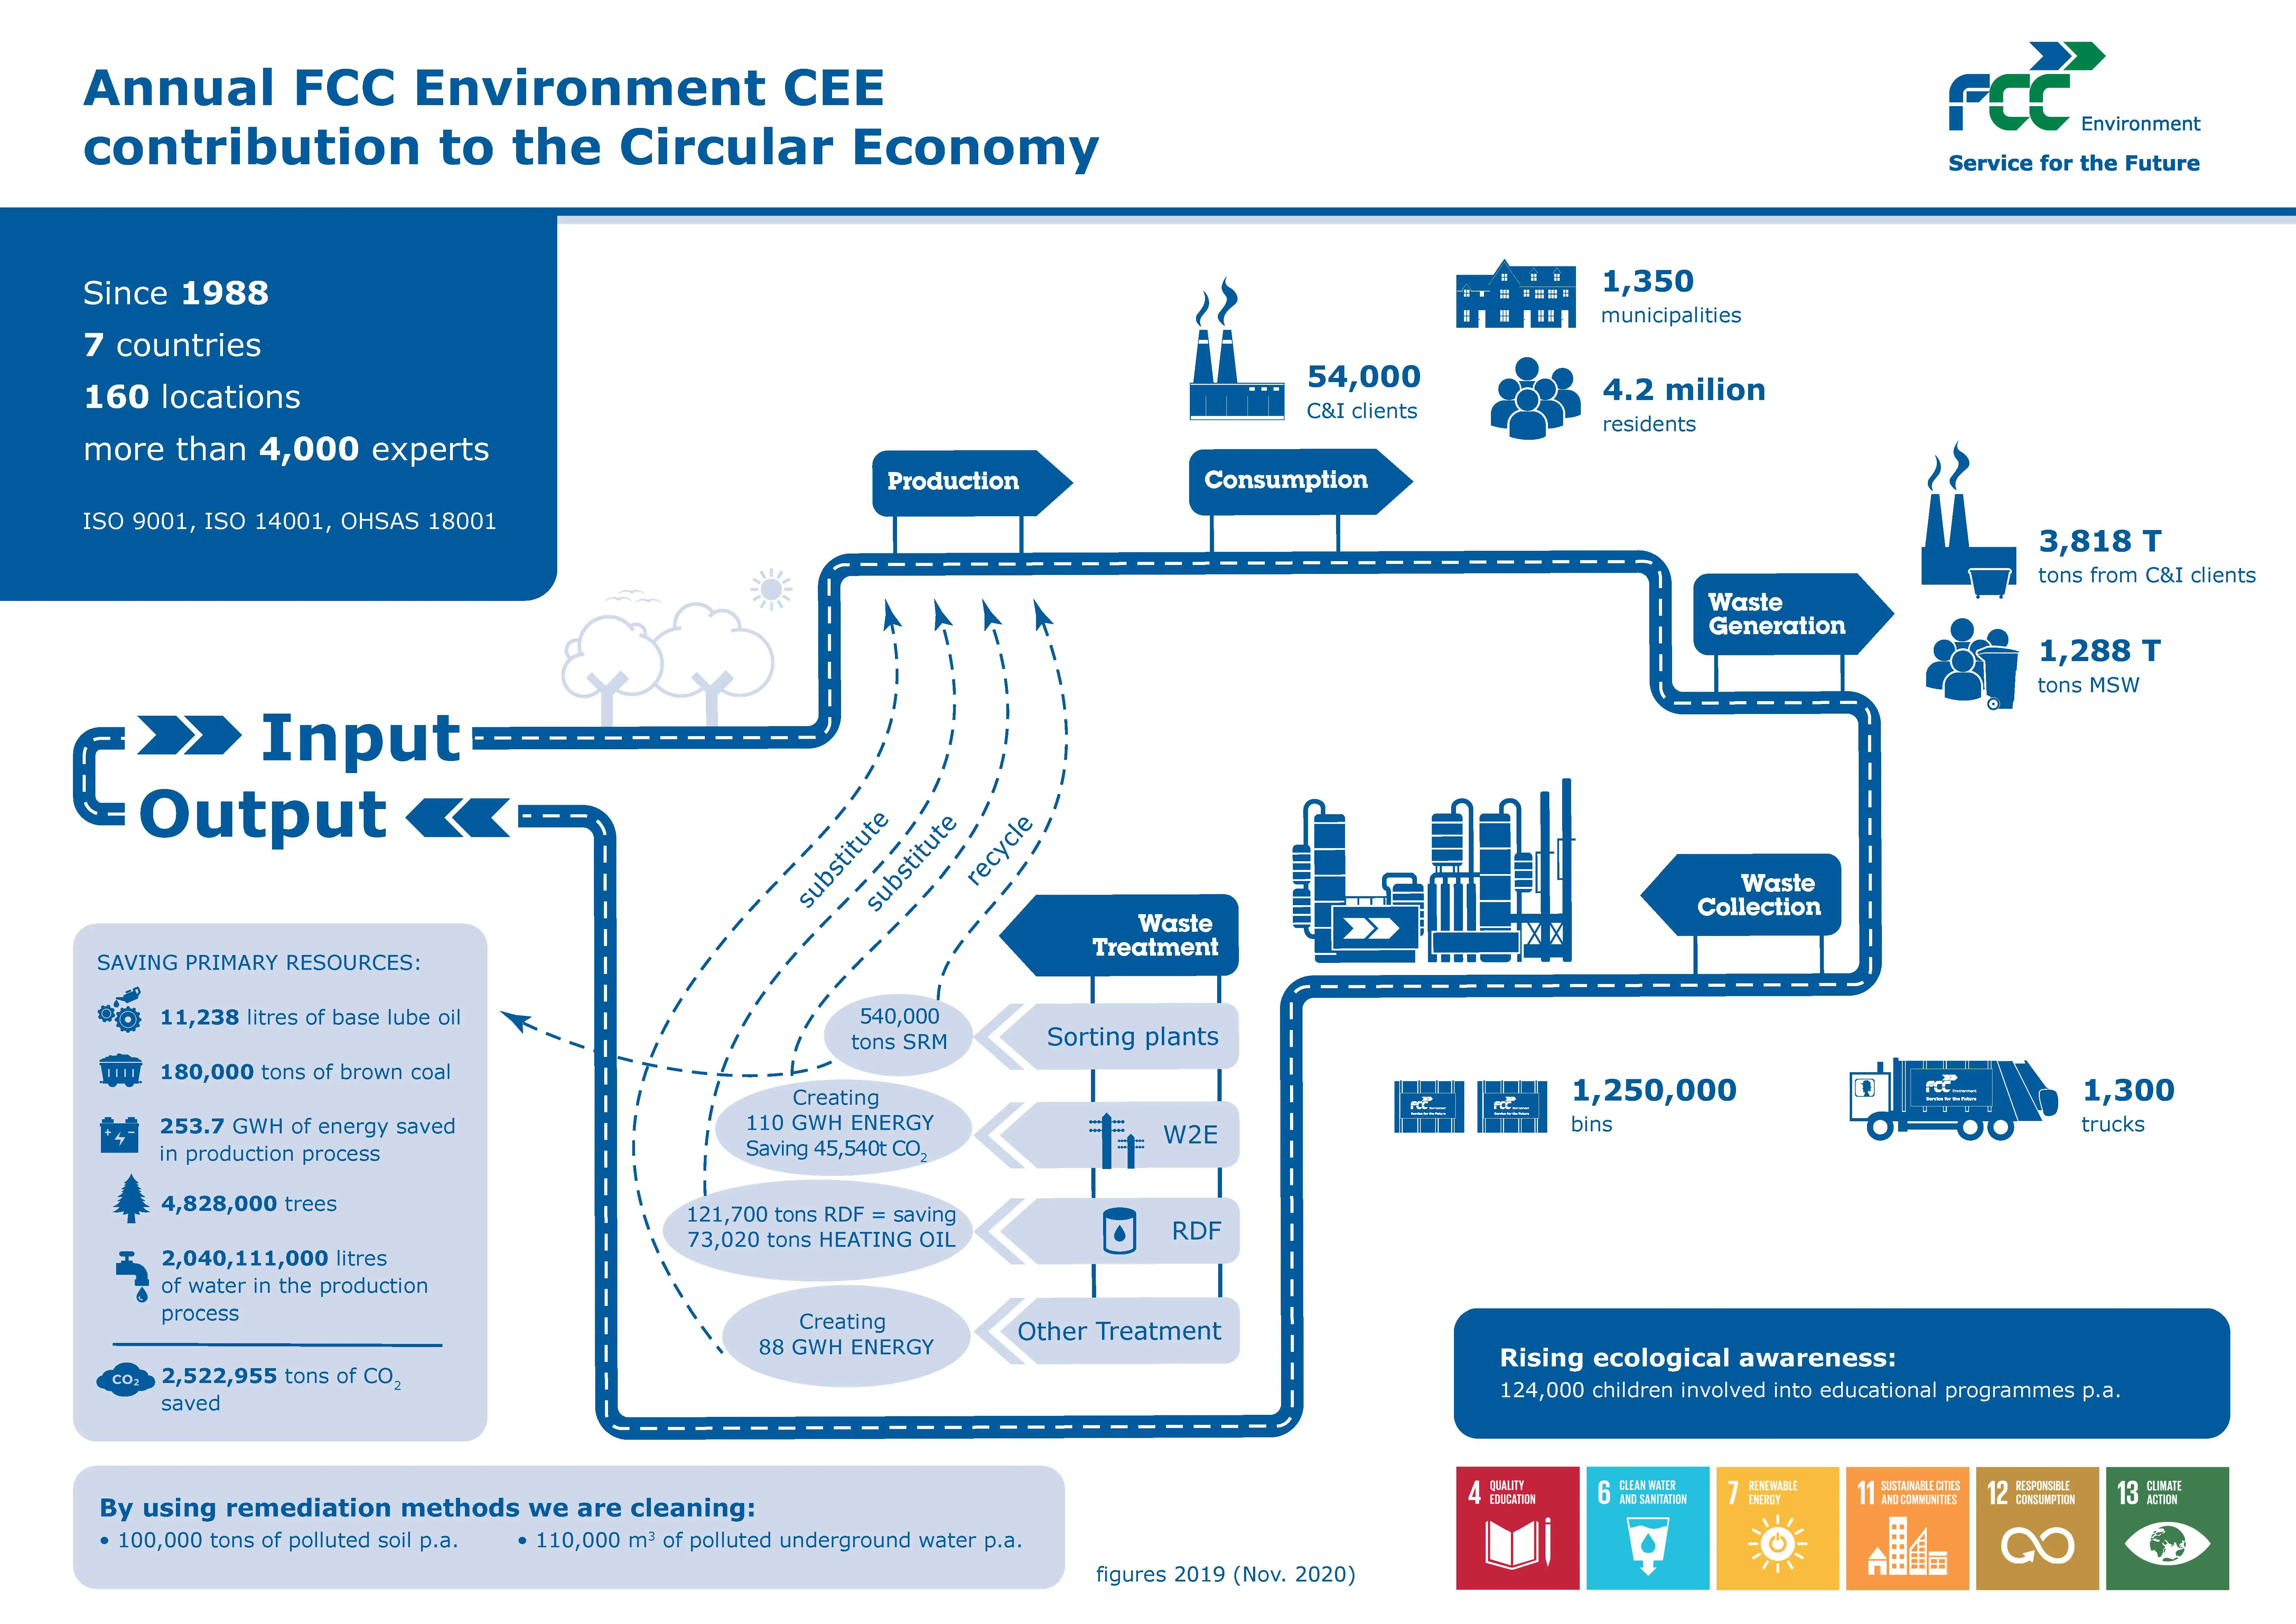 fcc_circular economy contribution